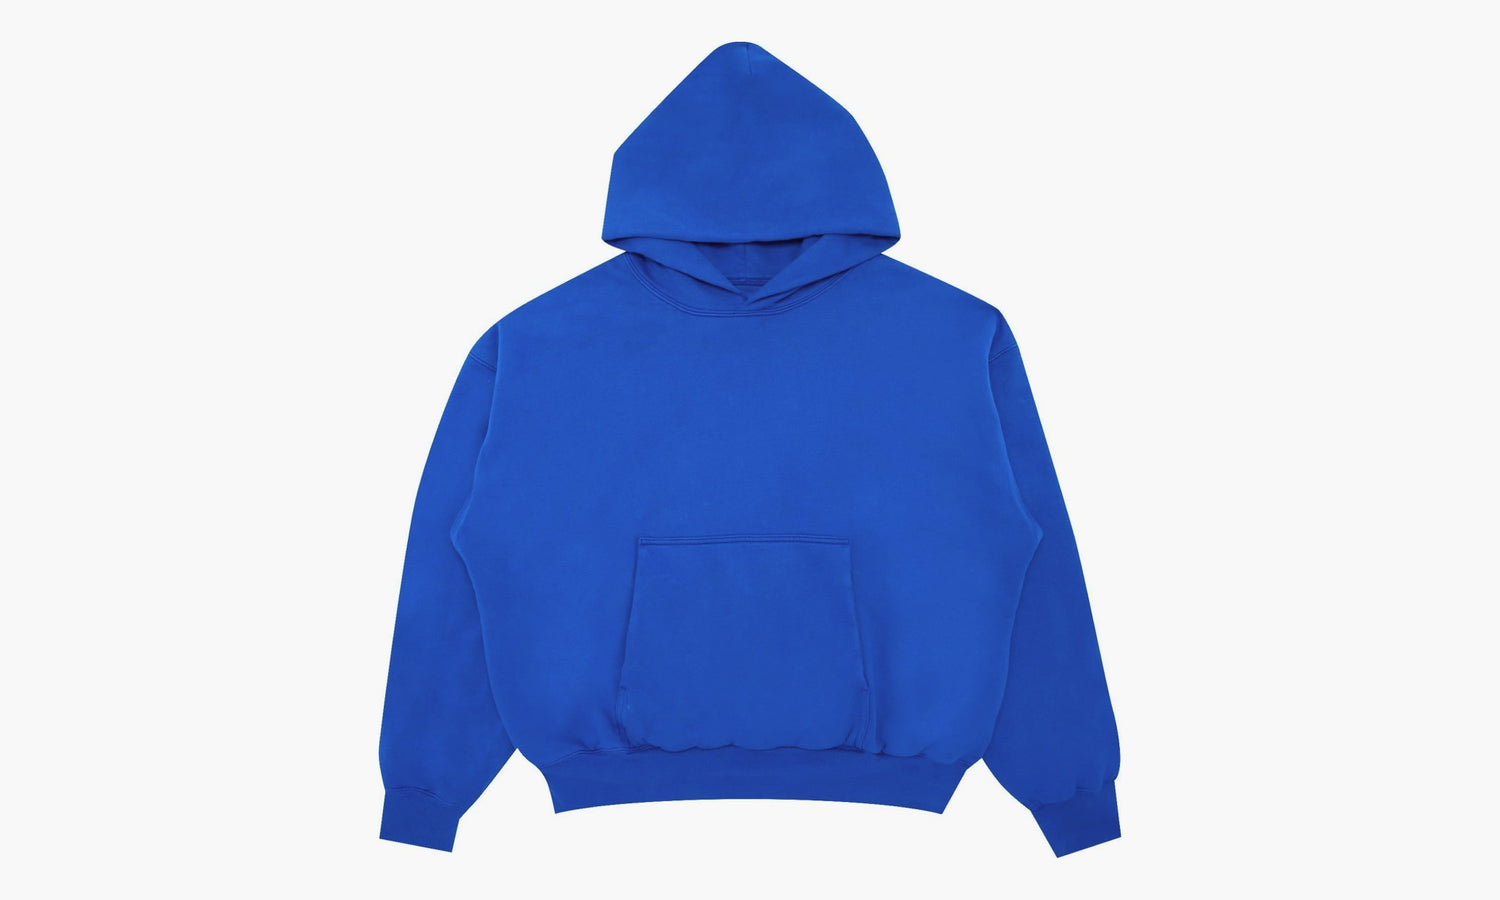 Yeezy x Gap Hoodie “Blue” - 701377-04 | Grailshop 